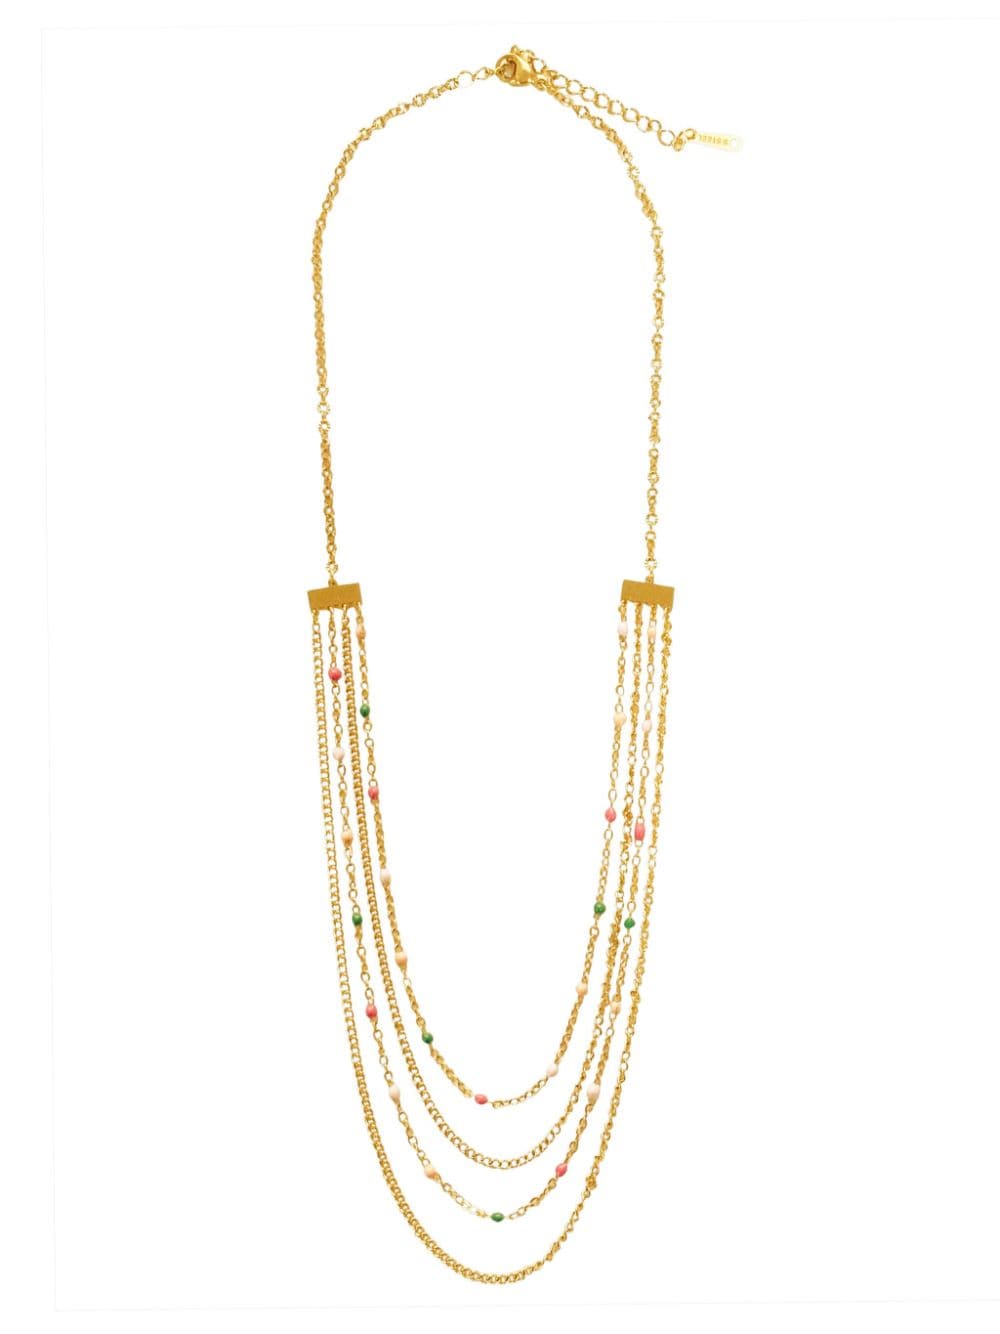 Hzmer Jewelry multi-chain necklace - Gold von Hzmer Jewelry